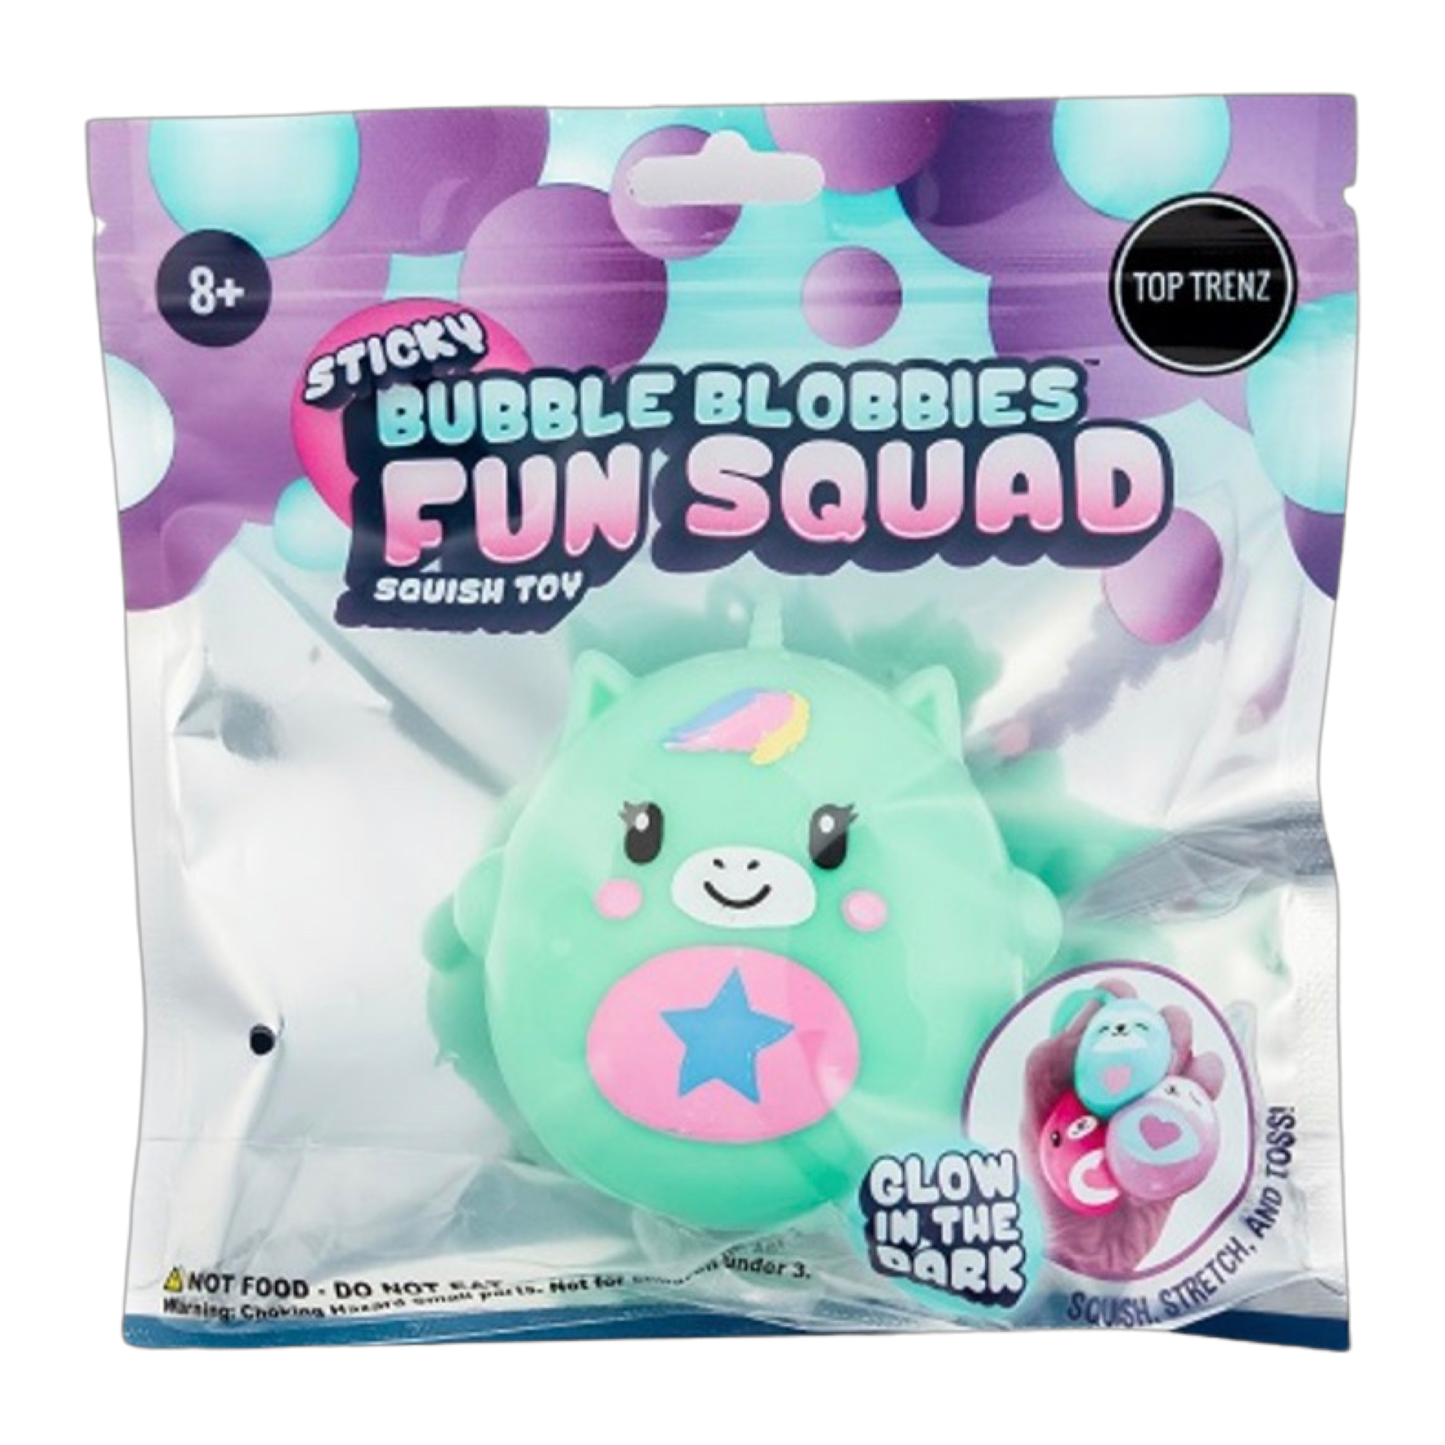 Sticky Bubble Blobbies Fun Squad